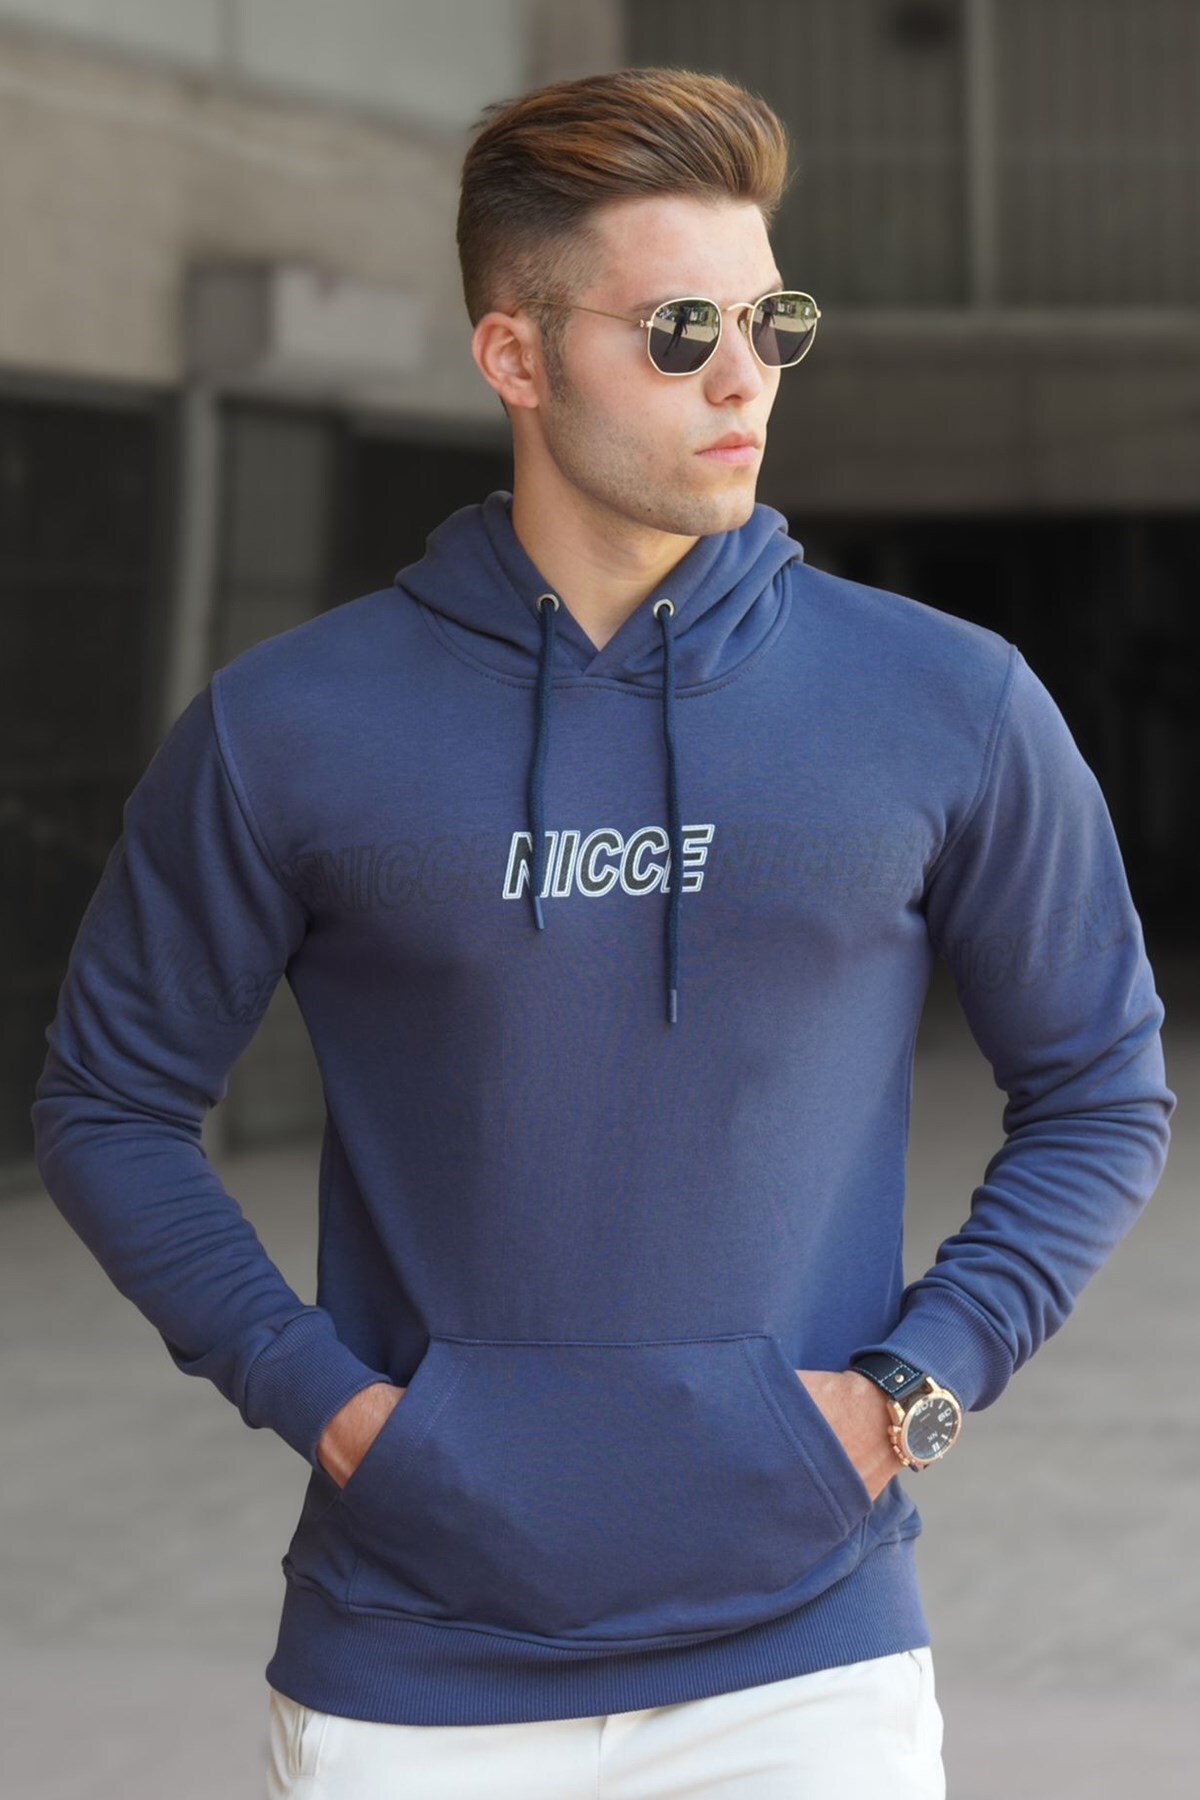 Madmext Navy Blue Printed Men's Sweatshirt 5305